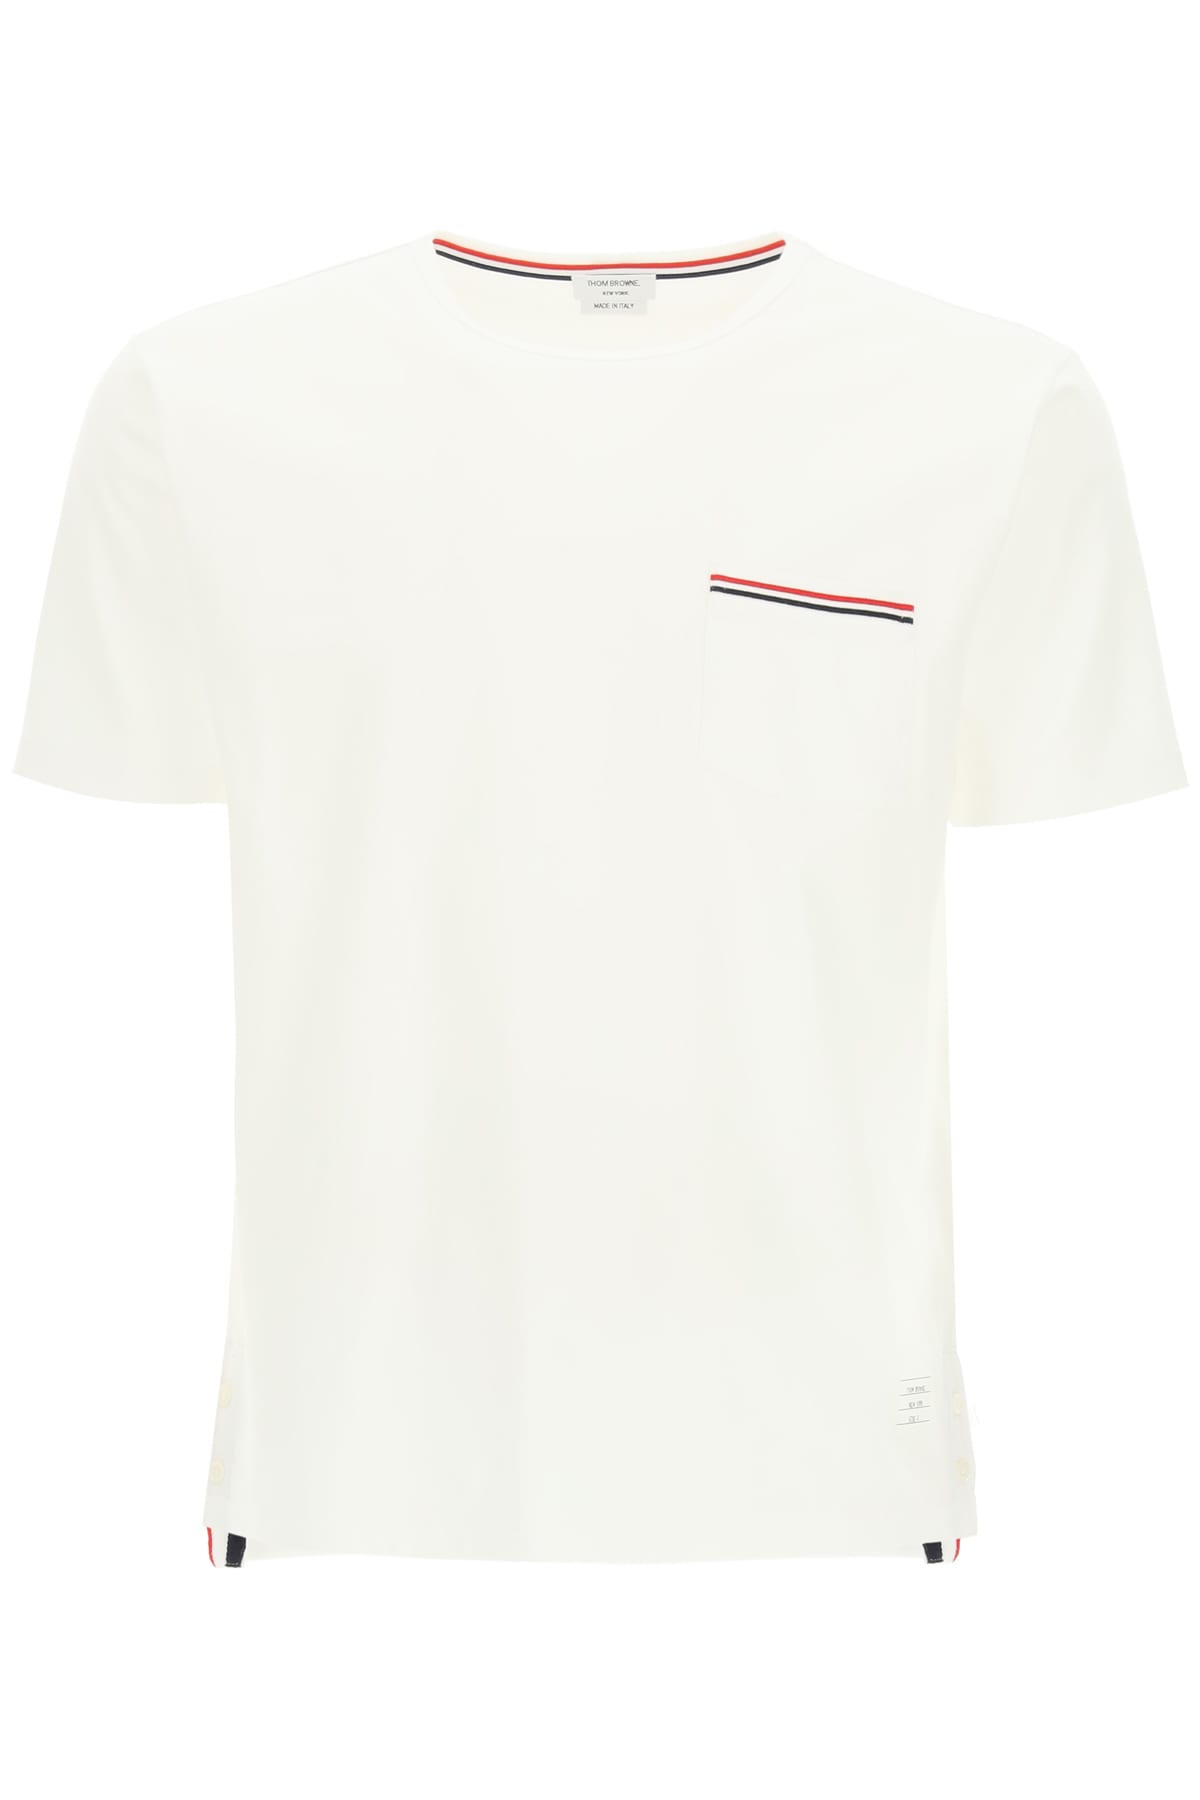 Thom Browne T-shirt Tricolour Pocket In White (white)